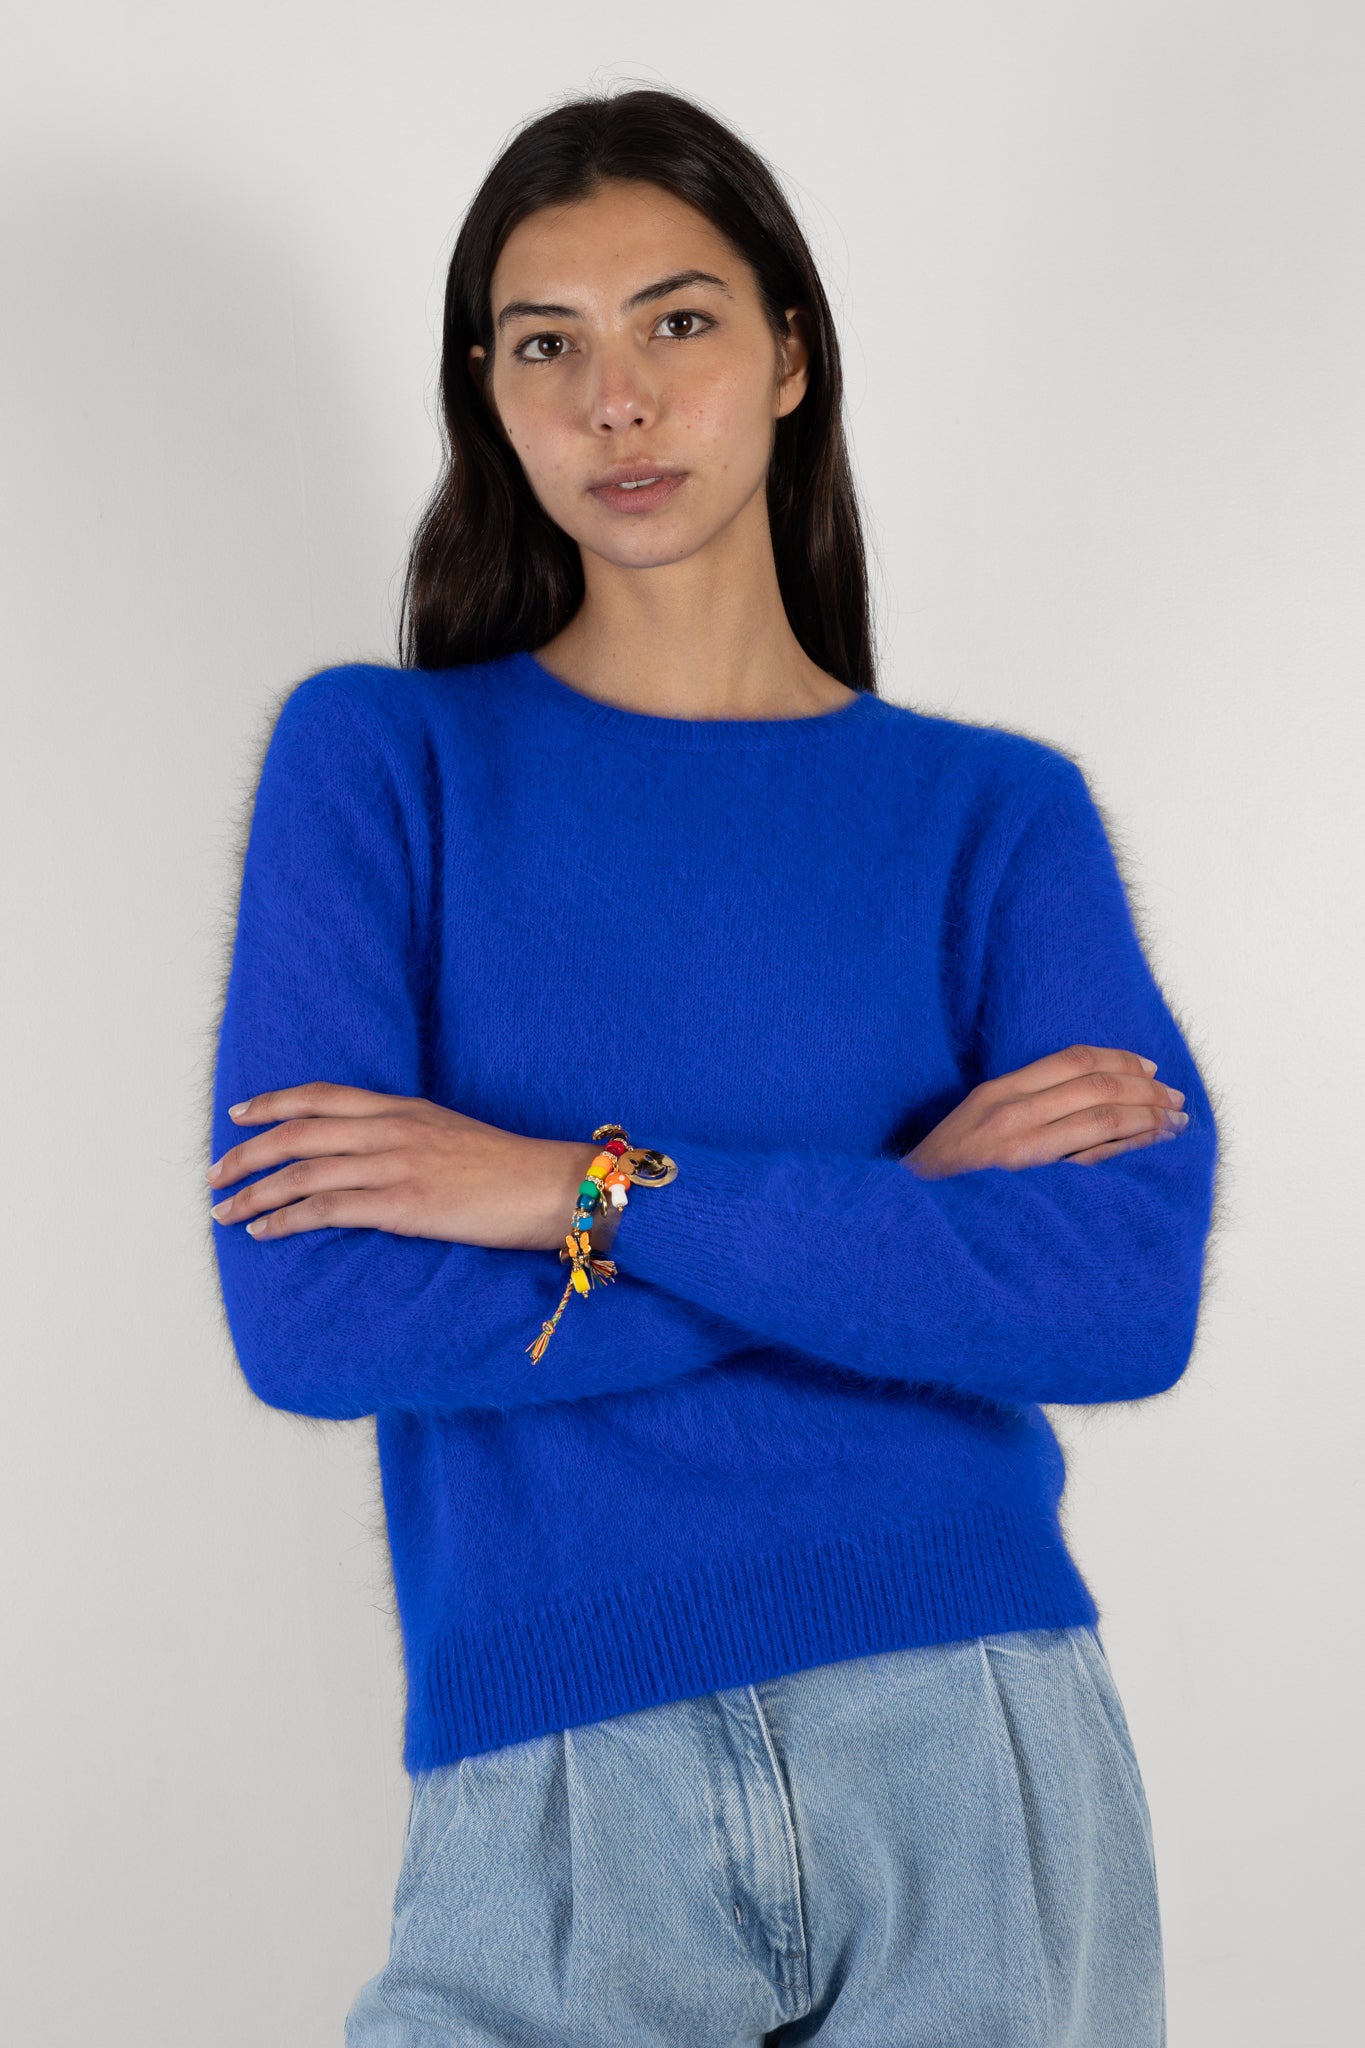 Womens knit | Bellerose Datti jumper | The Standard Store